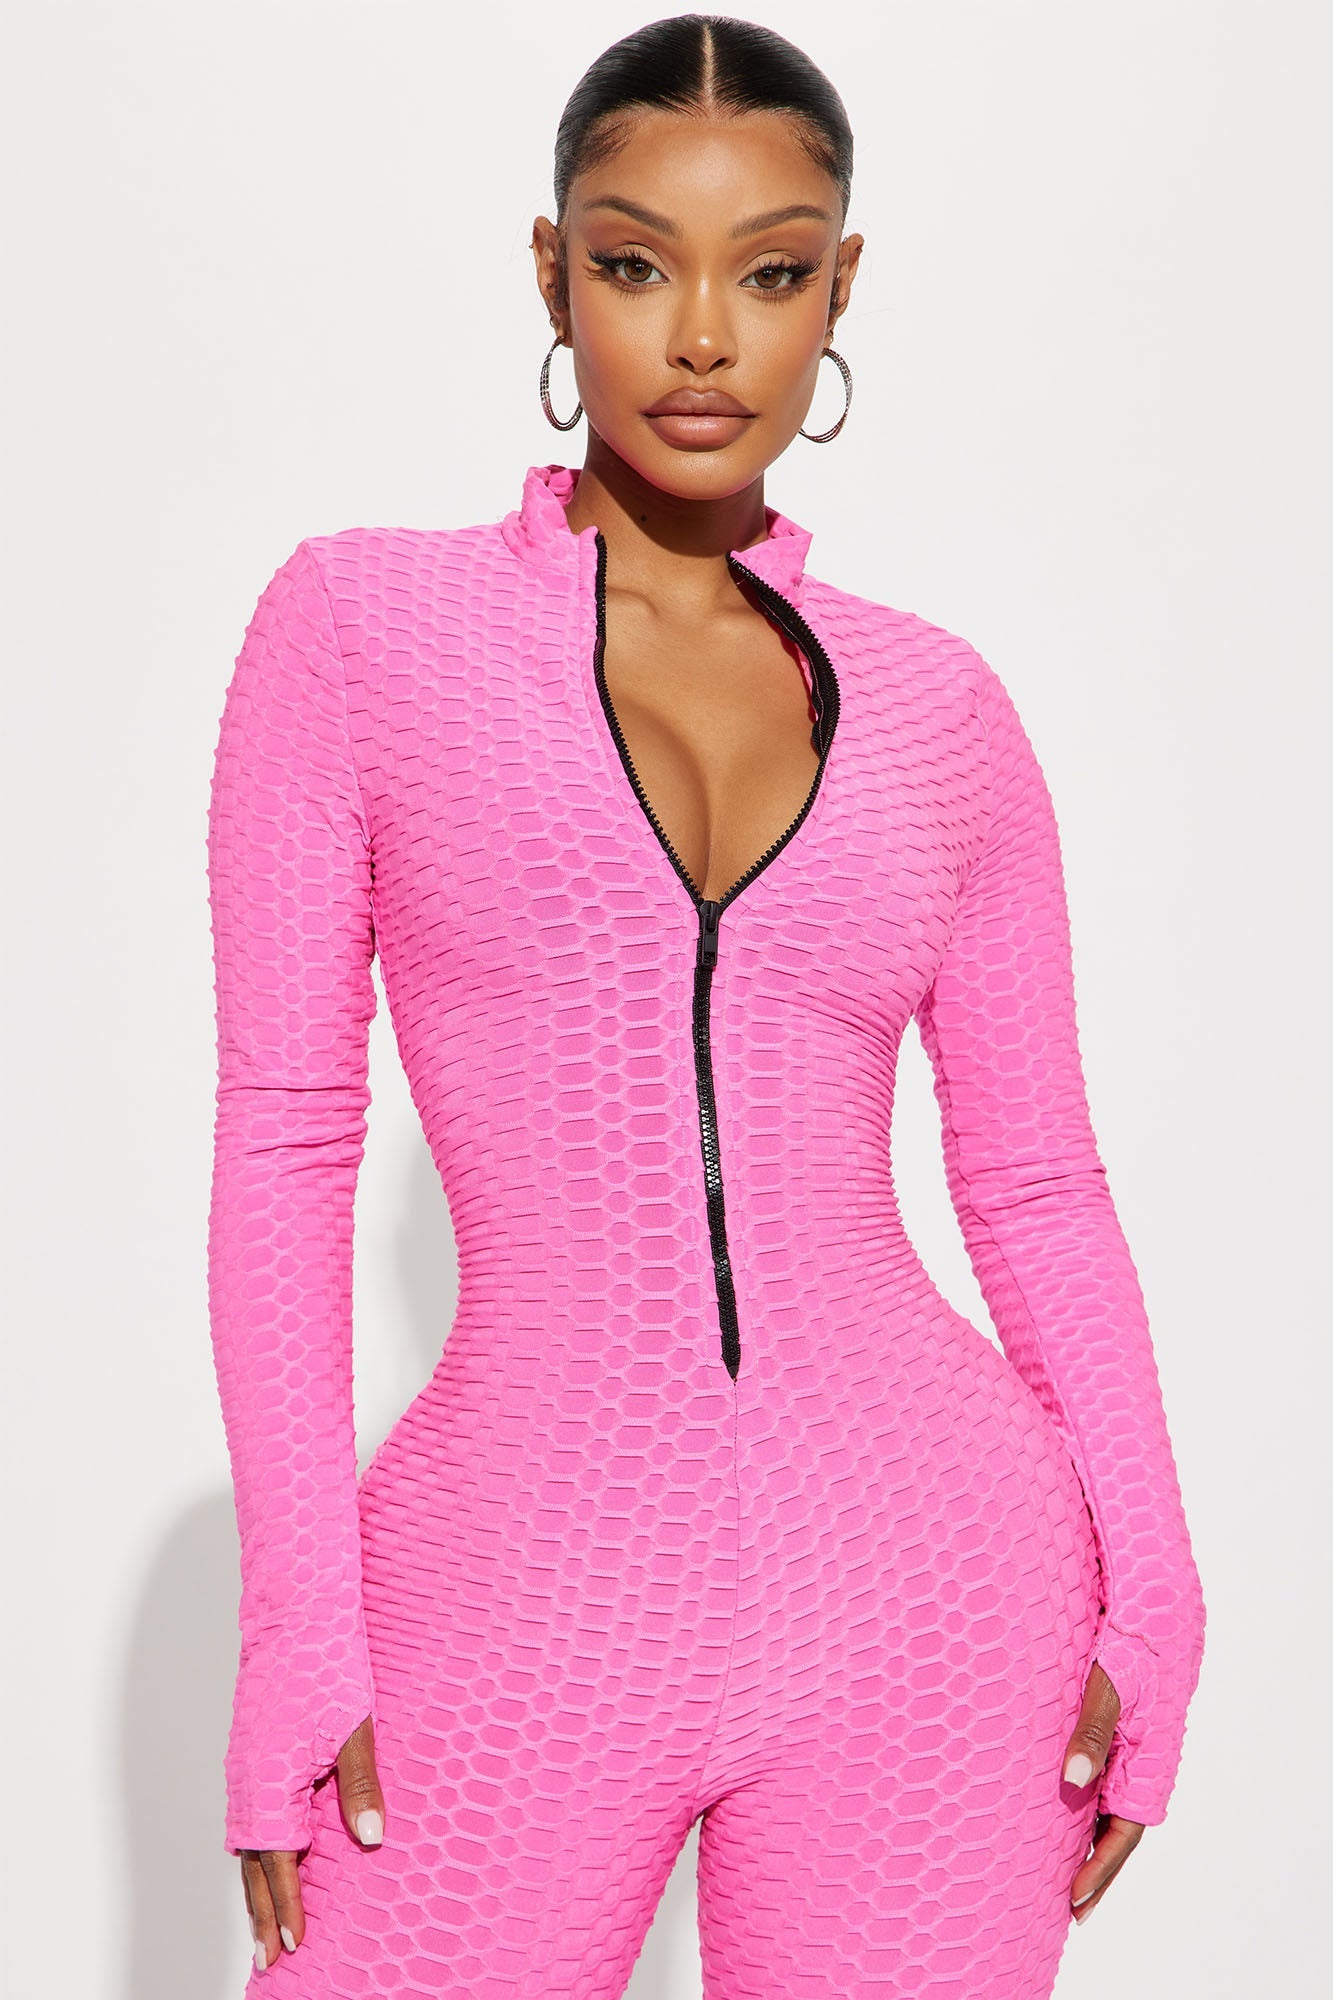 Sierra Honeycomb Jumpsuit - Hot Pink